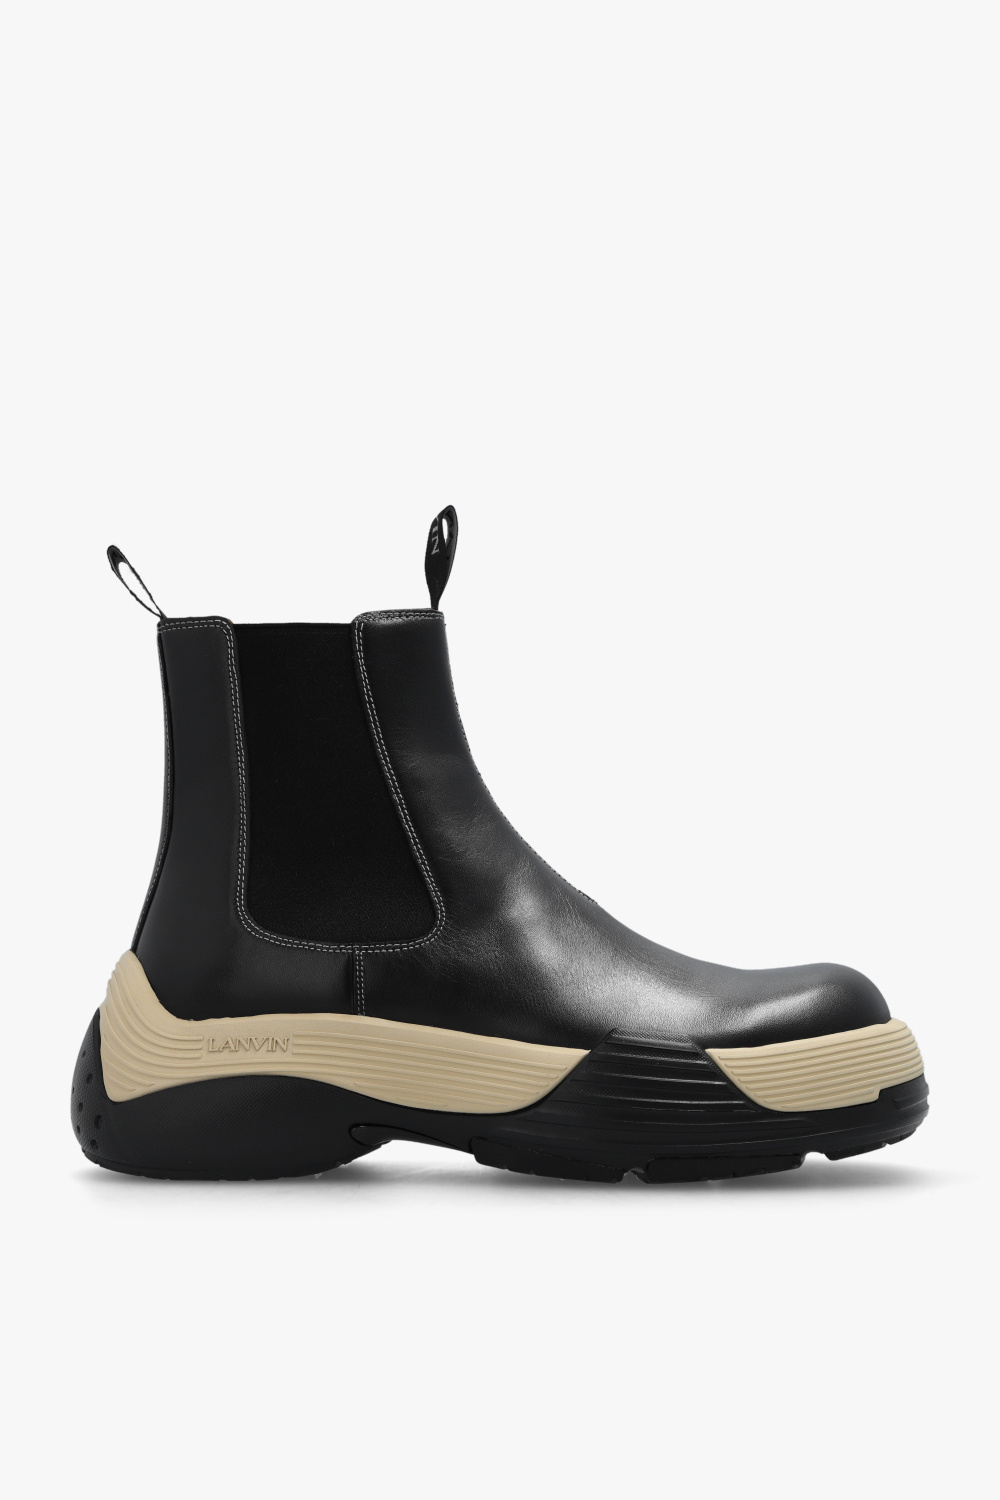 boots with logo Lanvin - Vitkac KR